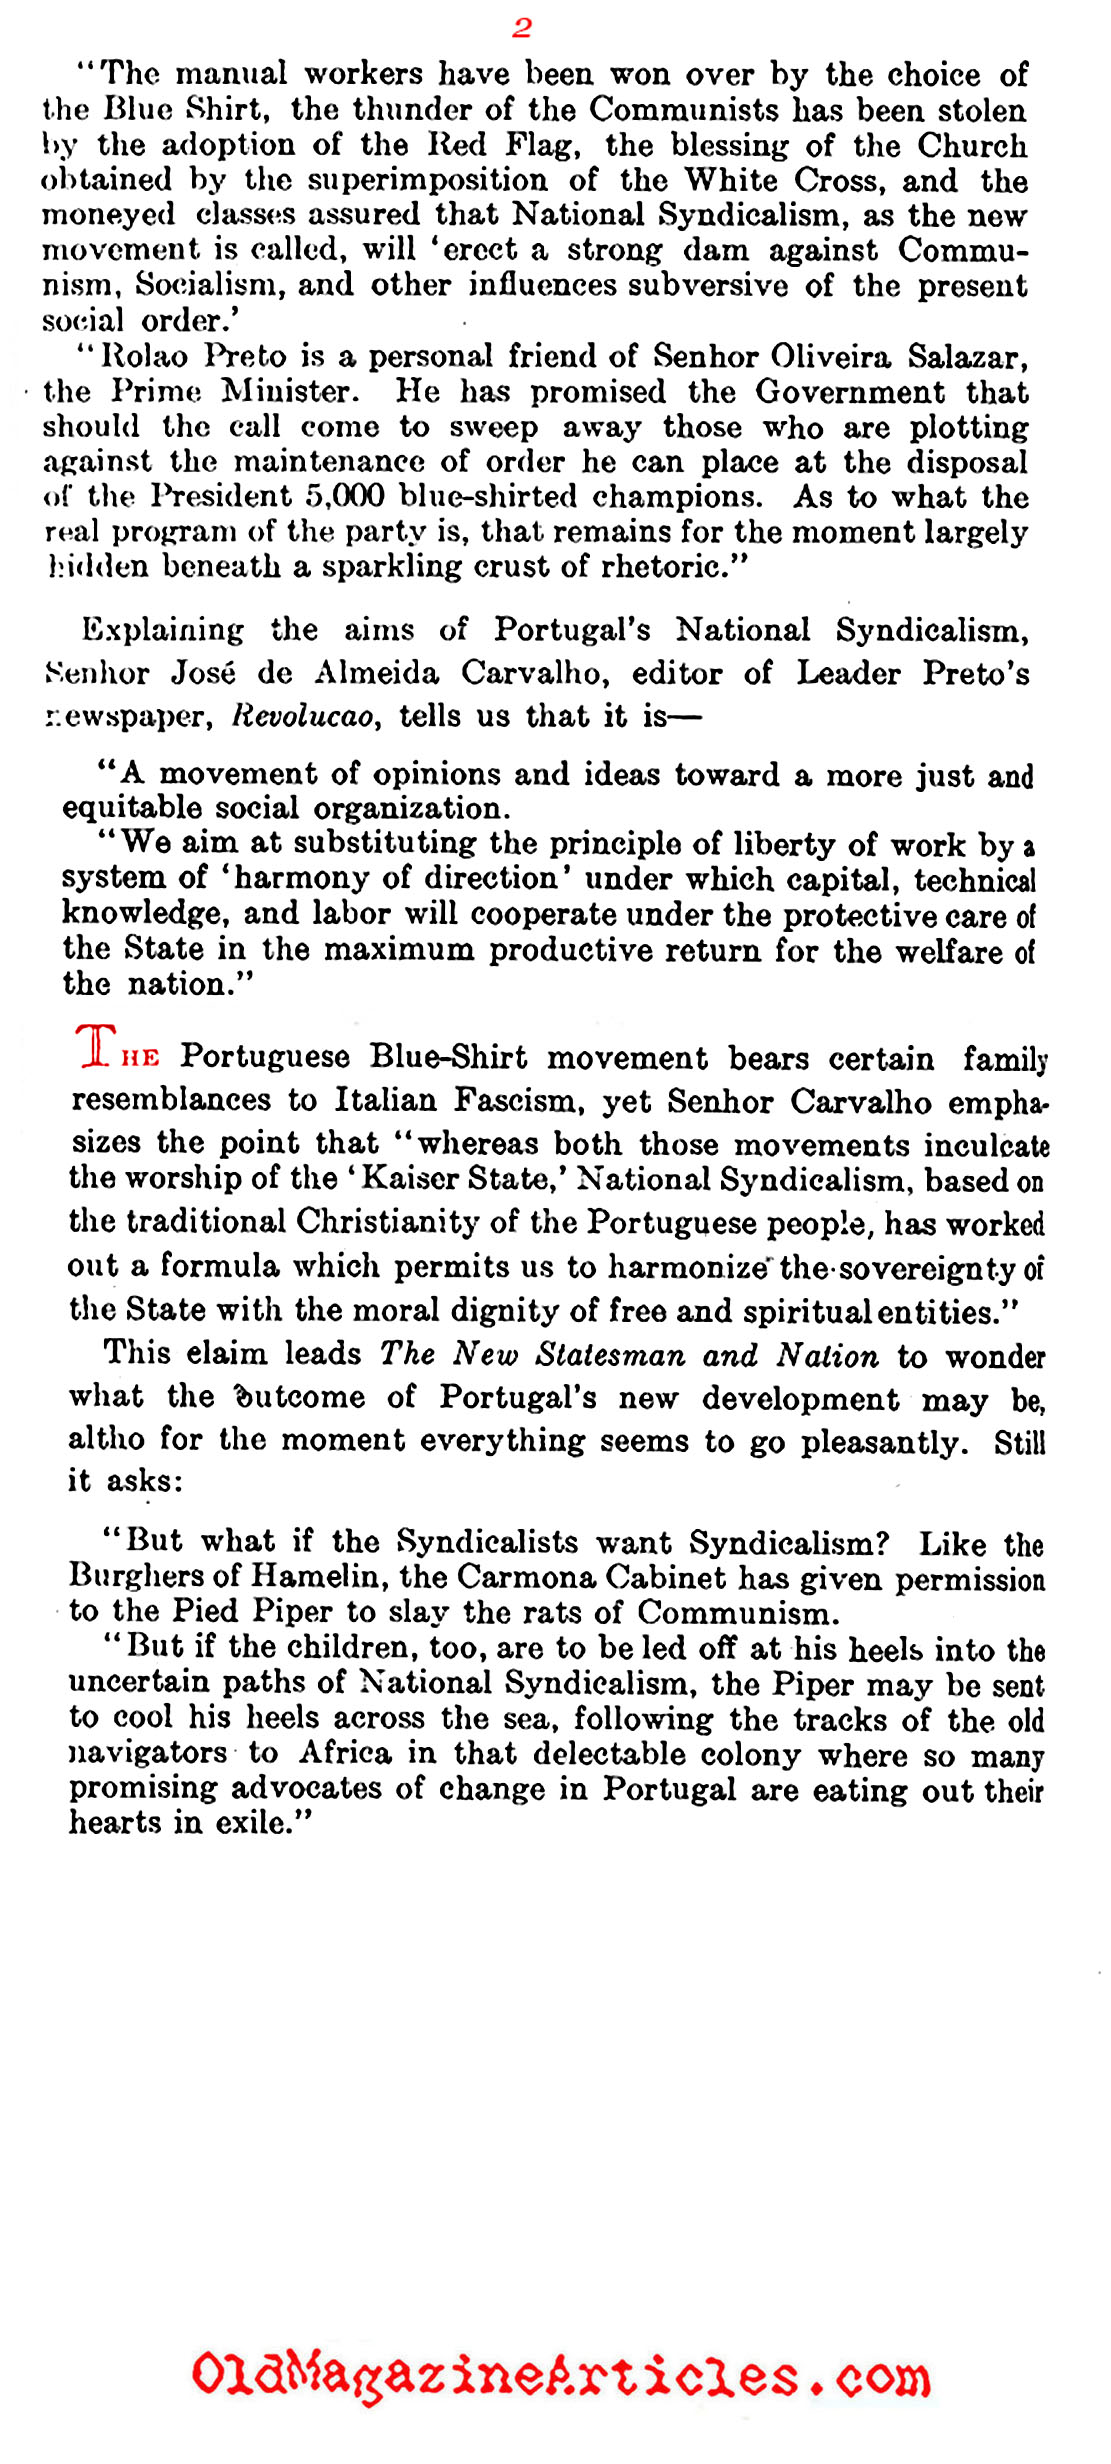 The Fascist Blue Shirts of Portugal (Literary Digest, 1933)